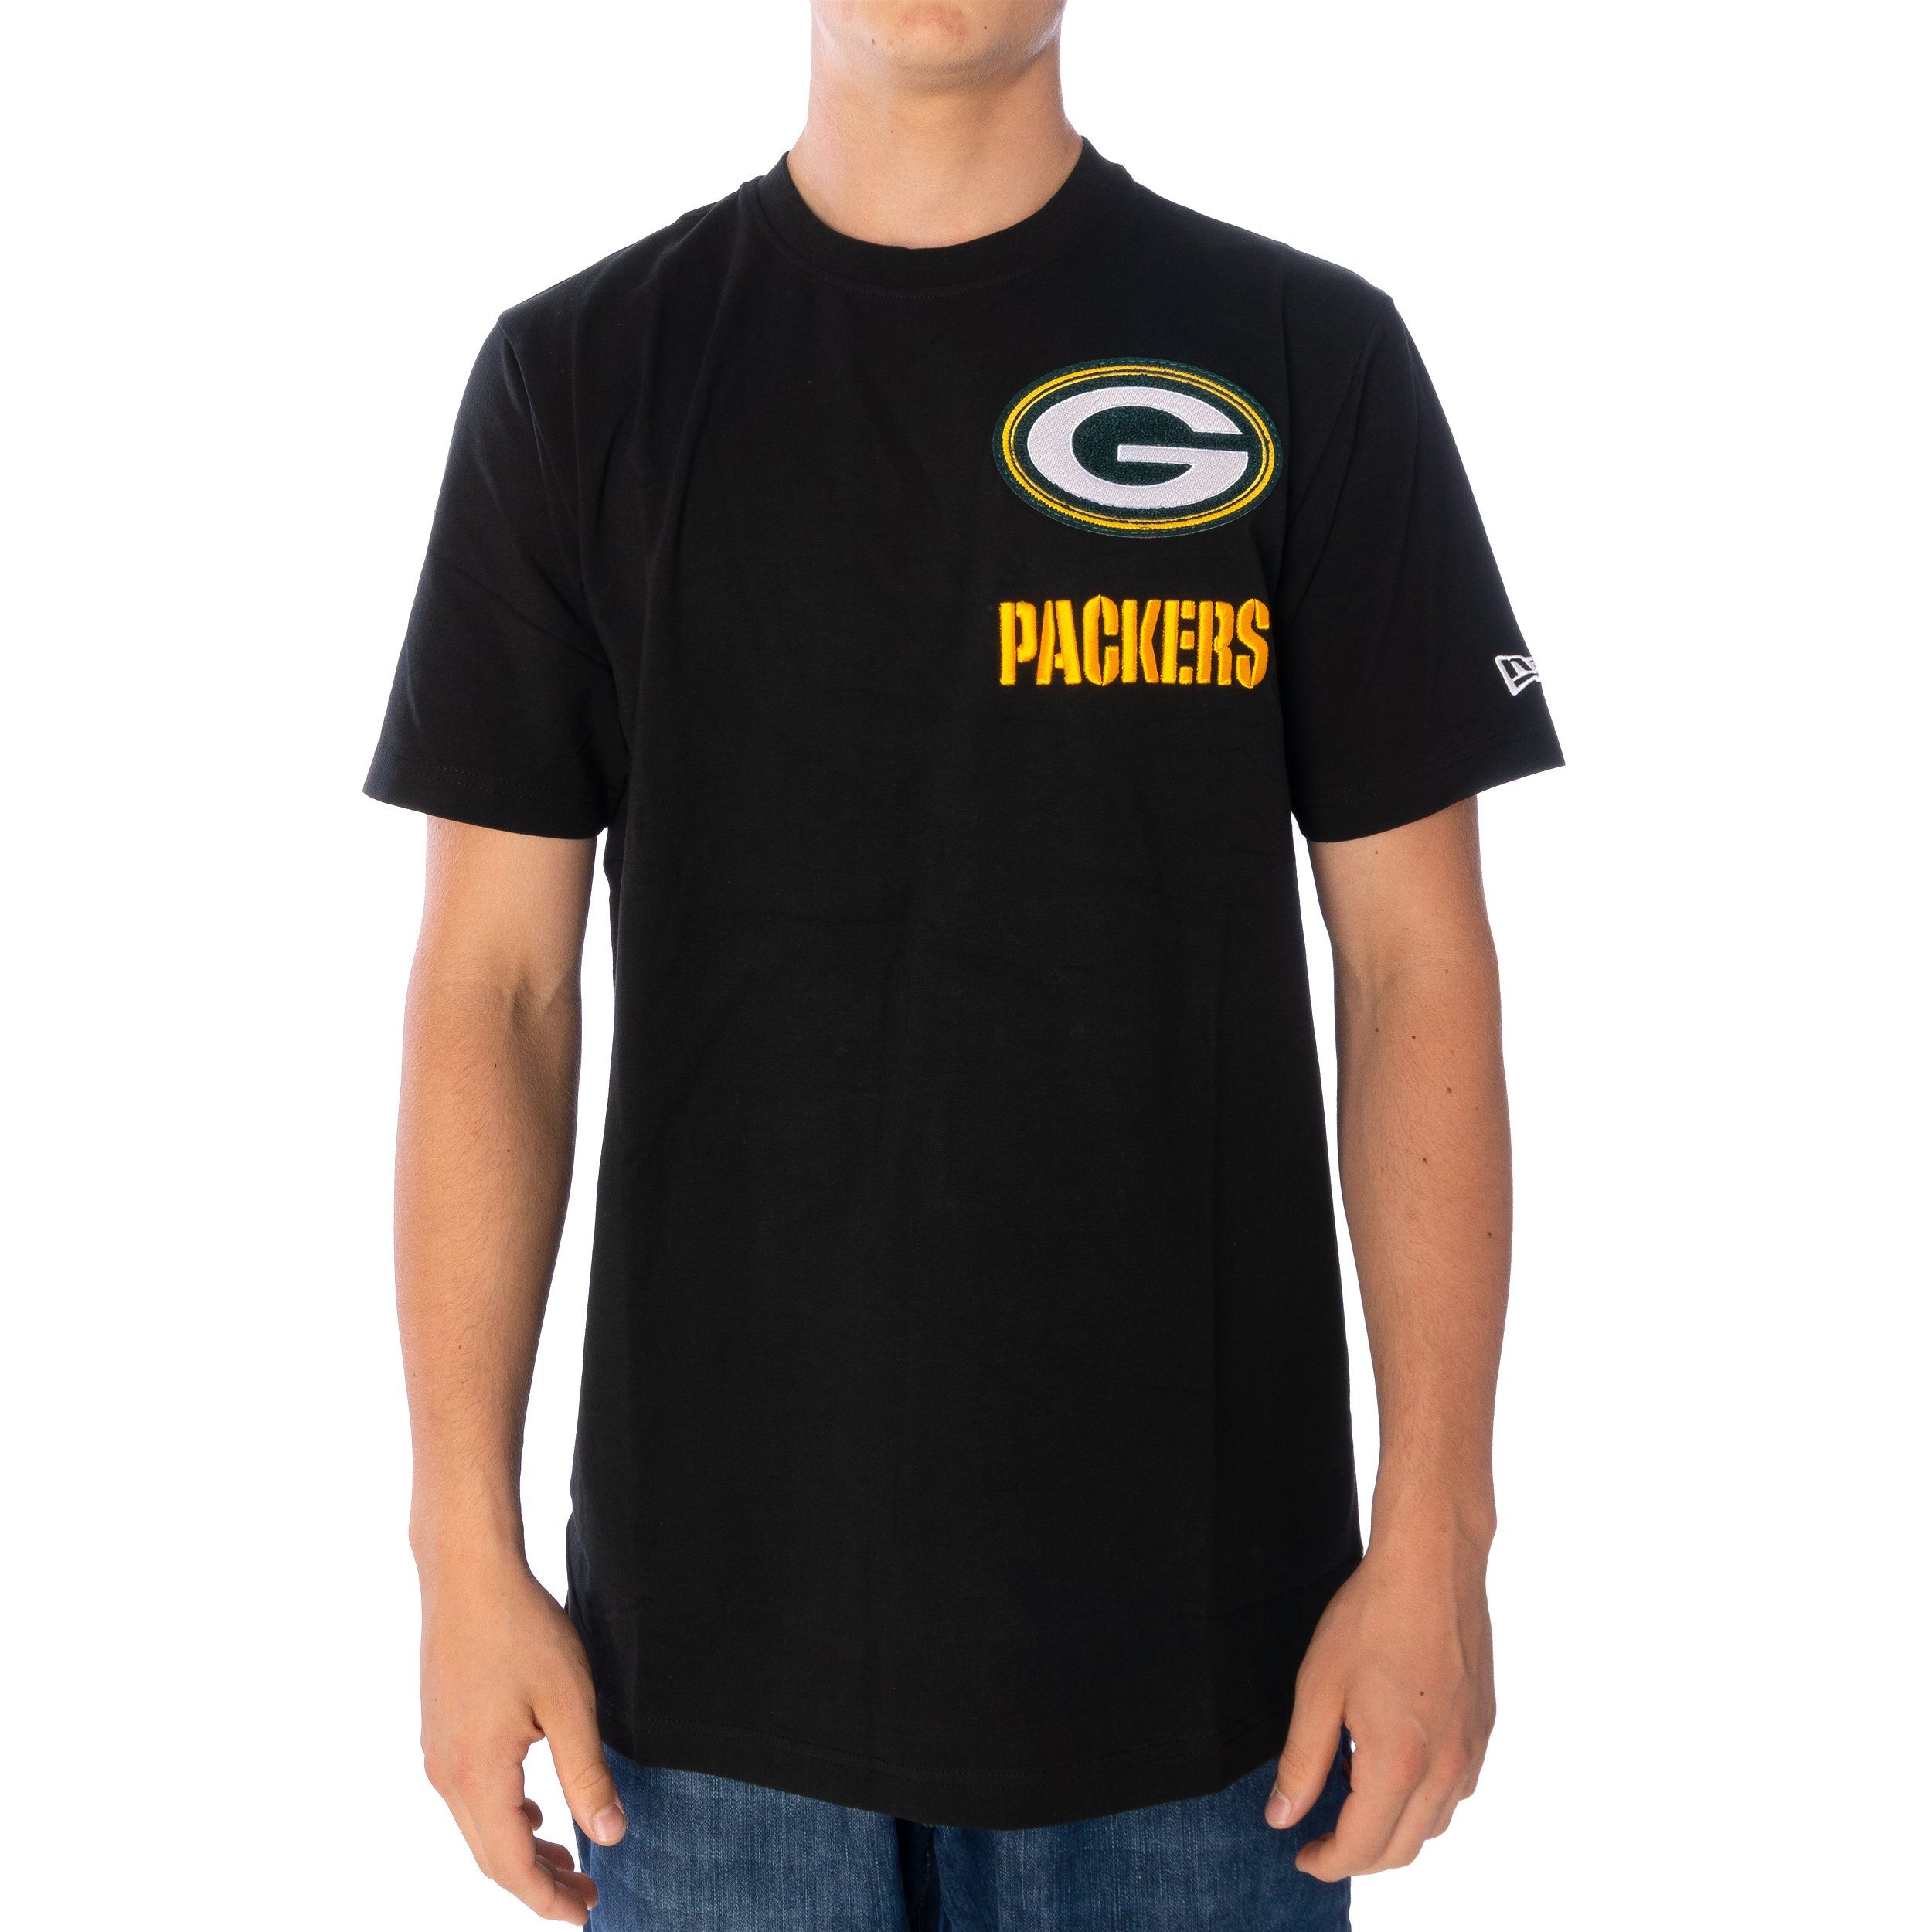 New Bay Green New Era Packers T-Shirt Logoselect Era T-Shirt